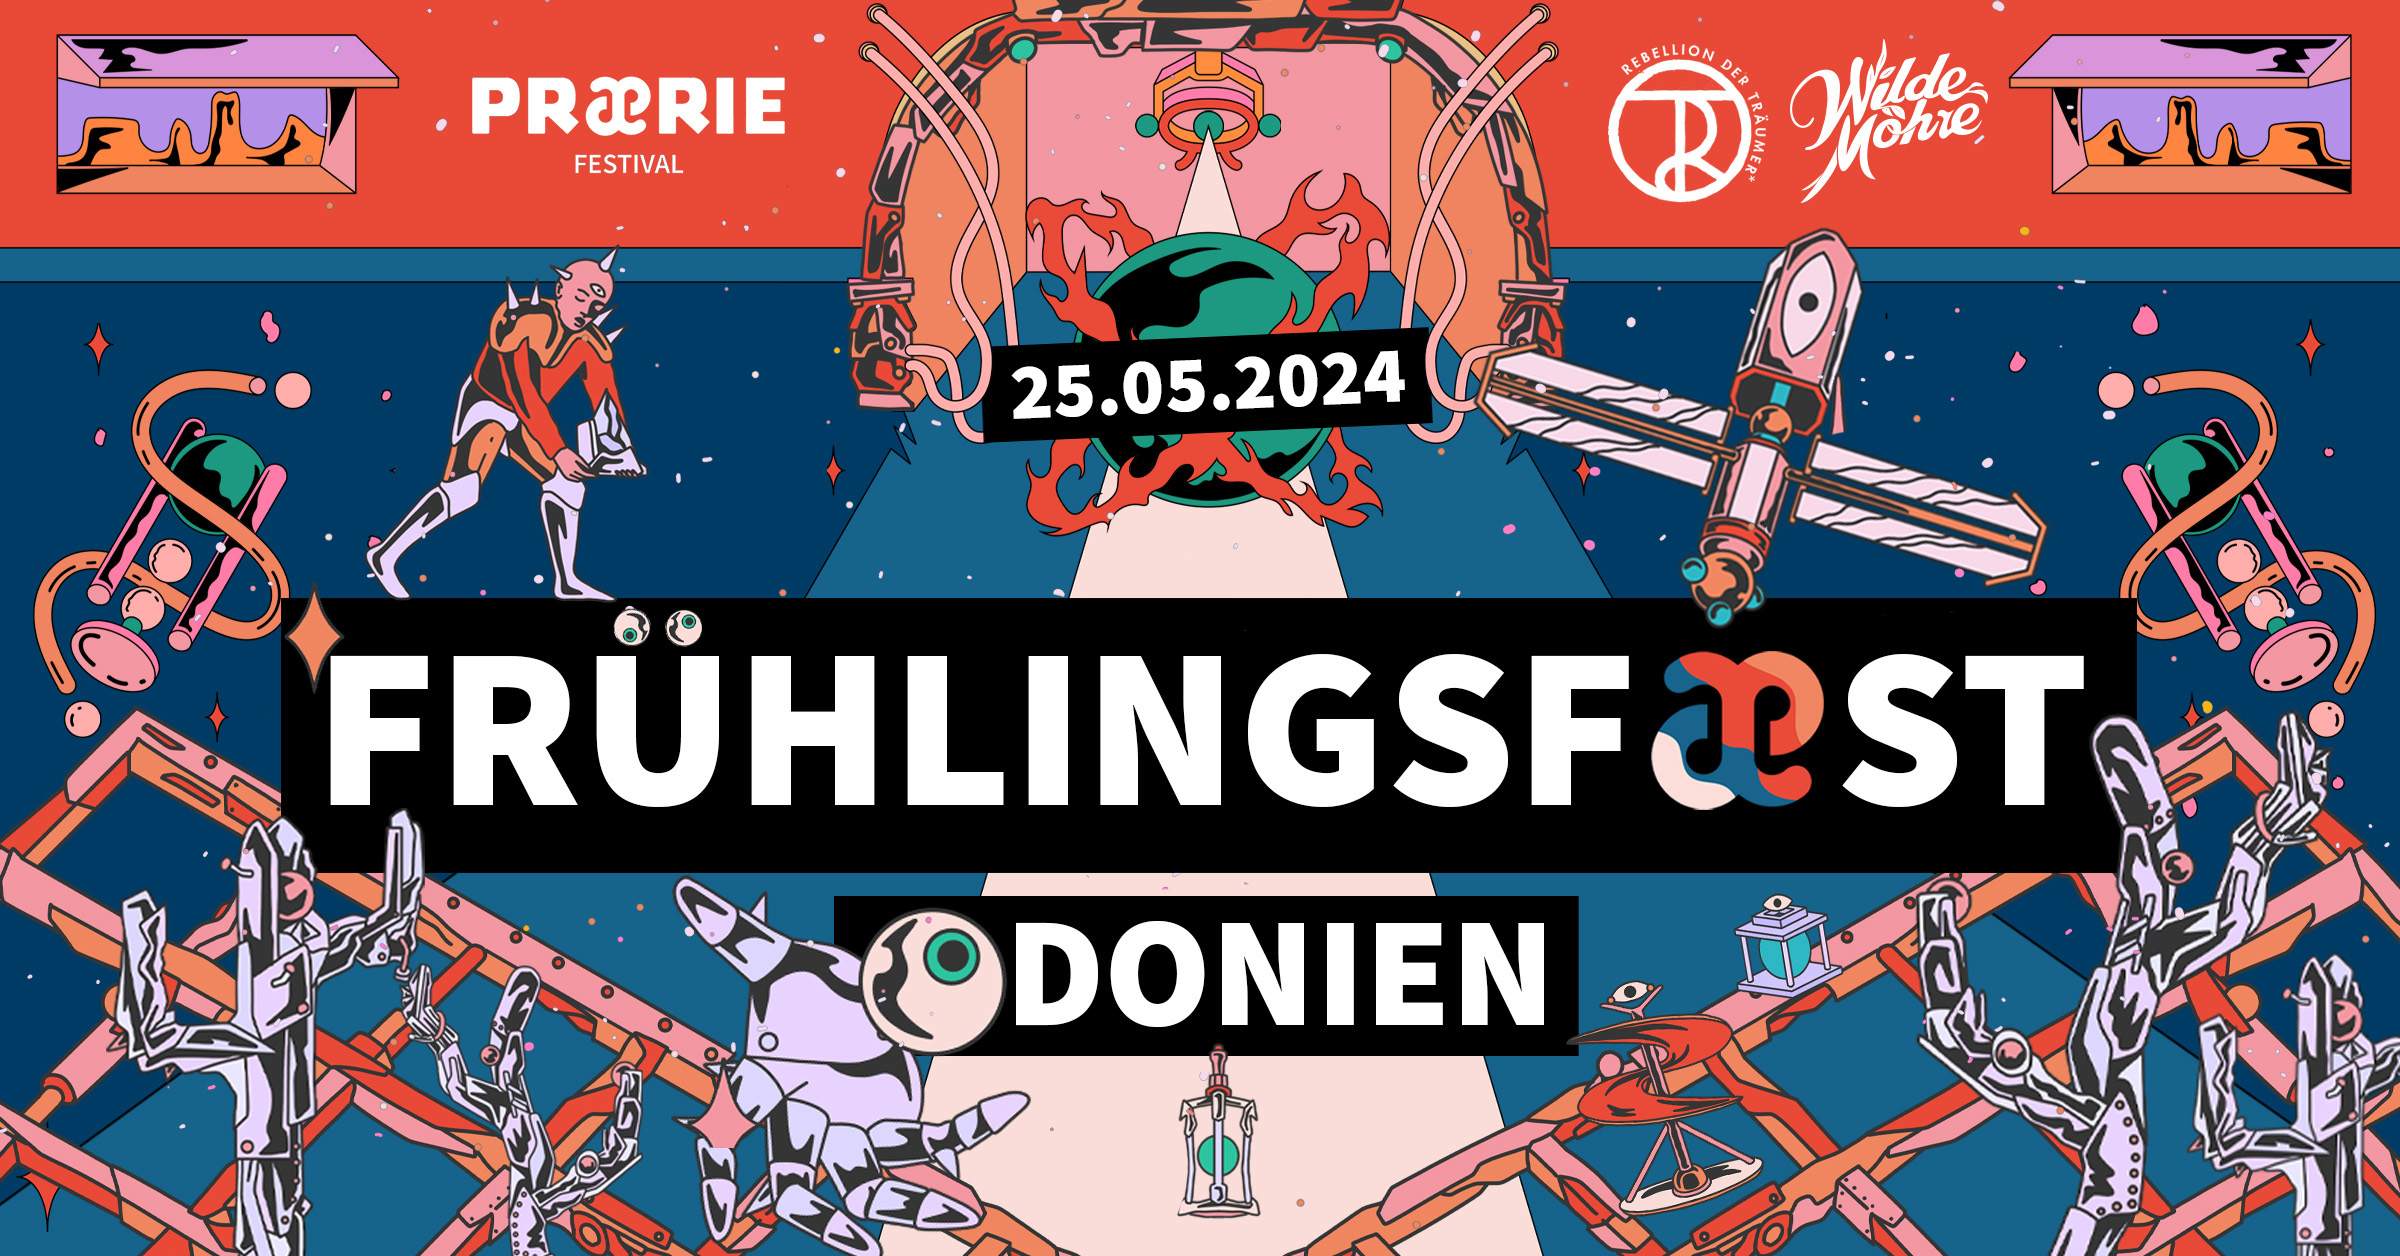 Frühlingsfest with Prærie Festival, Rebellion der Träumer & Wilde Möhre Festival - Página frontal